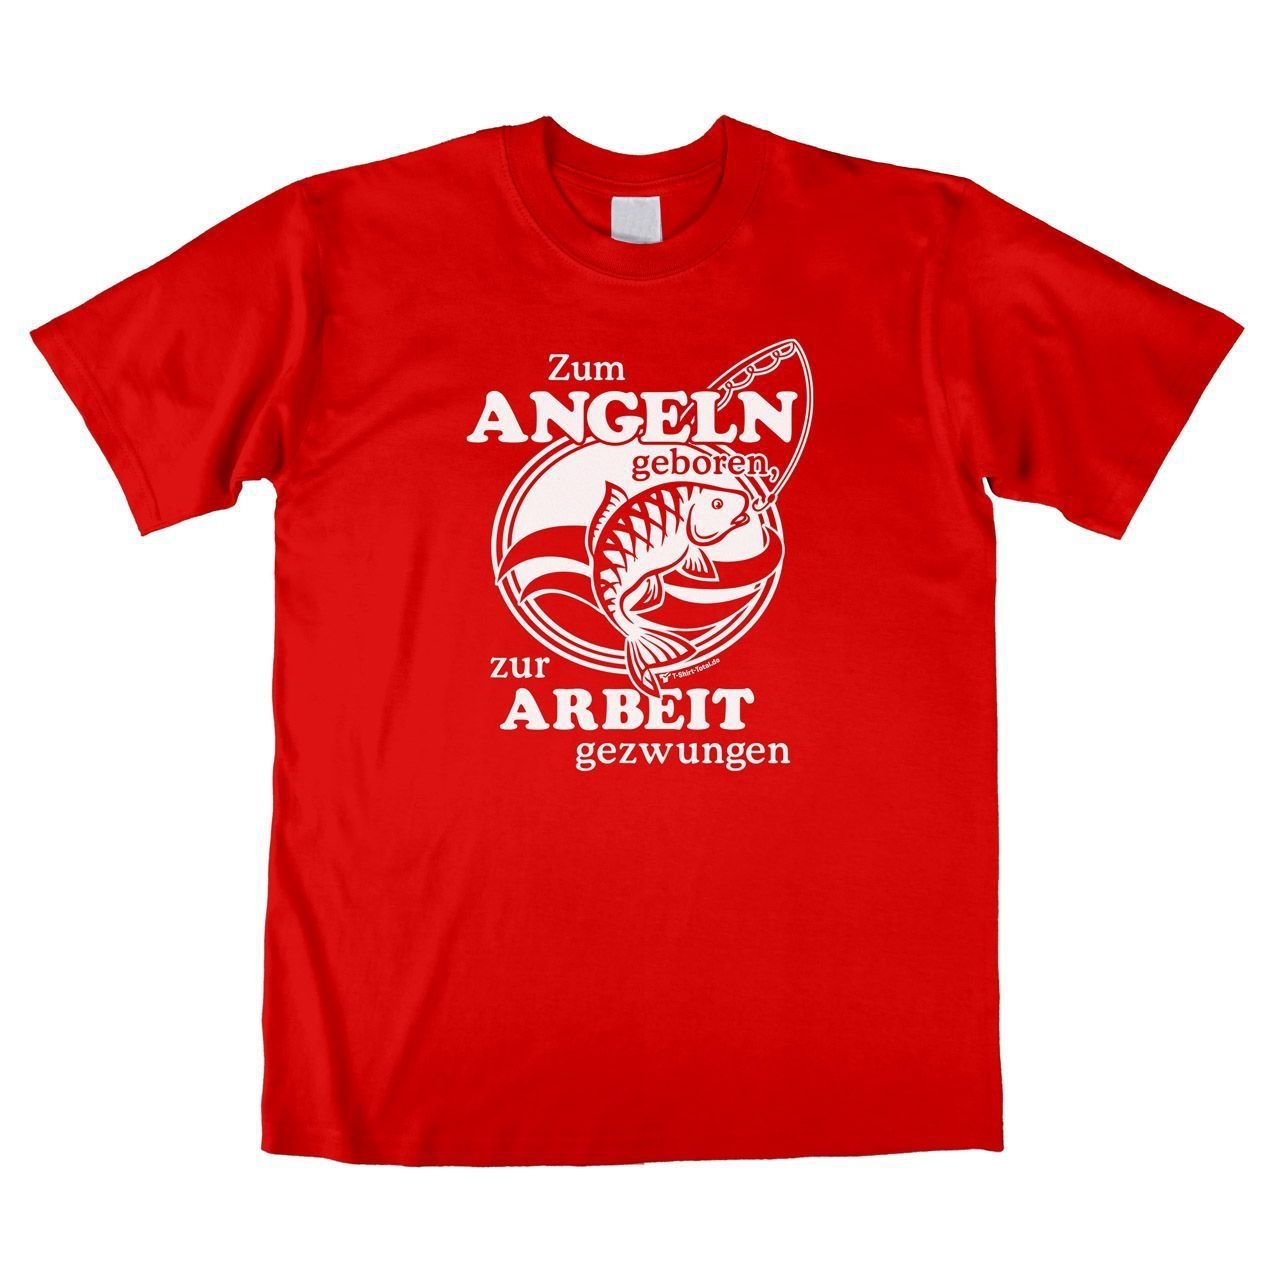 Zum Angeln geboren Unisex T-Shirt rot Large